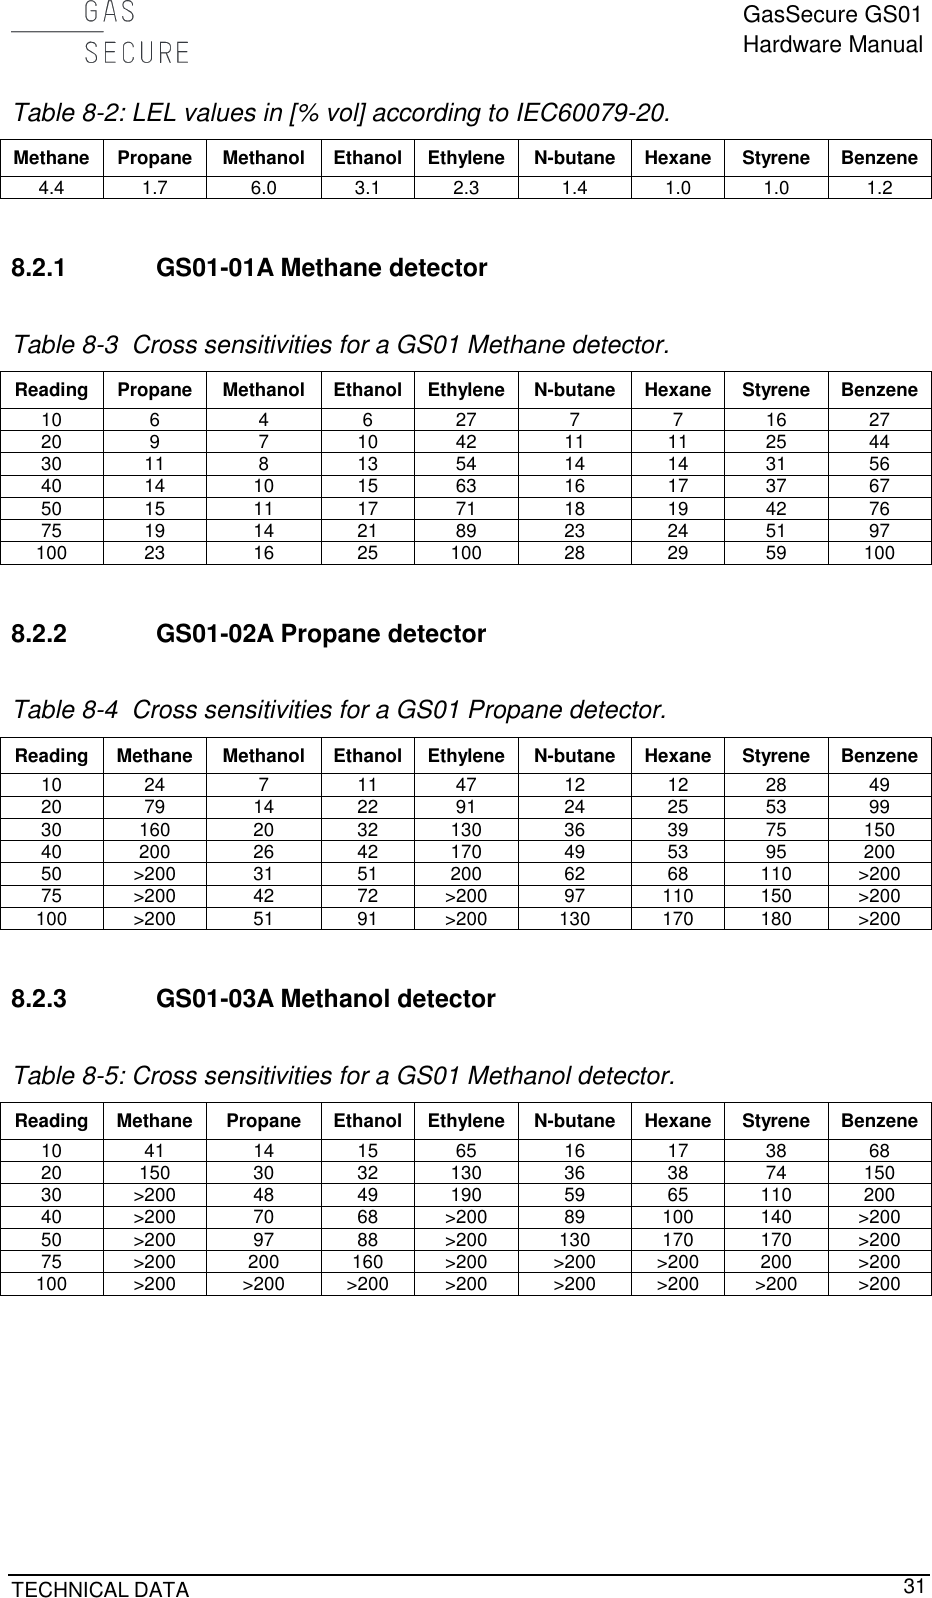  GasSecure GS01 Hardware Manual  TECHNICAL DATA     31 Table 8-2: LEL values in [% vol] according to IEC60079-20.    Methane Propane Methanol Ethanol Ethylene N-butane Hexane Styrene Benzene 4.4 1.7 6.0 3.1 2.3 1.4 1.0 1.0 1.2  8.2.1 GS01-01A Methane detector  Table 8-3  Cross sensitivities for a GS01 Methane detector. Reading Propane Methanol Ethanol Ethylene N-butane Hexane Styrene Benzene 10 6 4 6 27 7 7 16 27 20 9 7 10 42 11 11 25 44 30 11 8 13 54 14 14 31 56 40 14 10 15 63 16 17 37 67 50 15 11 17 71 18 19 42 76 75 19 14 21 89 23 24 51 97 100 23 16 25 100 28 29 59 100  8.2.2 GS01-02A Propane detector  Table 8-4  Cross sensitivities for a GS01 Propane detector. Reading Methane Methanol Ethanol Ethylene N-butane Hexane Styrene Benzene 10 24 7 11 47 12 12 28 49 20 79 14 22 91 24 25 53 99 30 160 20 32 130 36 39 75 150 40 200 26 42 170 49 53 95 200 50 &gt;200 31 51 200 62 68 110 &gt;200 75 &gt;200 42 72 &gt;200 97 110 150 &gt;200 100 &gt;200 51 91 &gt;200 130 170 180 &gt;200  8.2.3 GS01-03A Methanol detector  Table 8-5: Cross sensitivities for a GS01 Methanol detector. Reading Methane Propane Ethanol Ethylene N-butane Hexane Styrene Benzene 10 41 14 15 65 16 17 38 68 20 150 30 32 130 36 38 74 150 30 &gt;200 48 49 190 59 65 110 200 40 &gt;200 70 68 &gt;200 89 100 140 &gt;200 50 &gt;200 97 88 &gt;200 130 170 170 &gt;200 75 &gt;200 200 160 &gt;200 &gt;200 &gt;200 200 &gt;200 100 &gt;200 &gt;200 &gt;200 &gt;200 &gt;200 &gt;200 &gt;200 &gt;200   